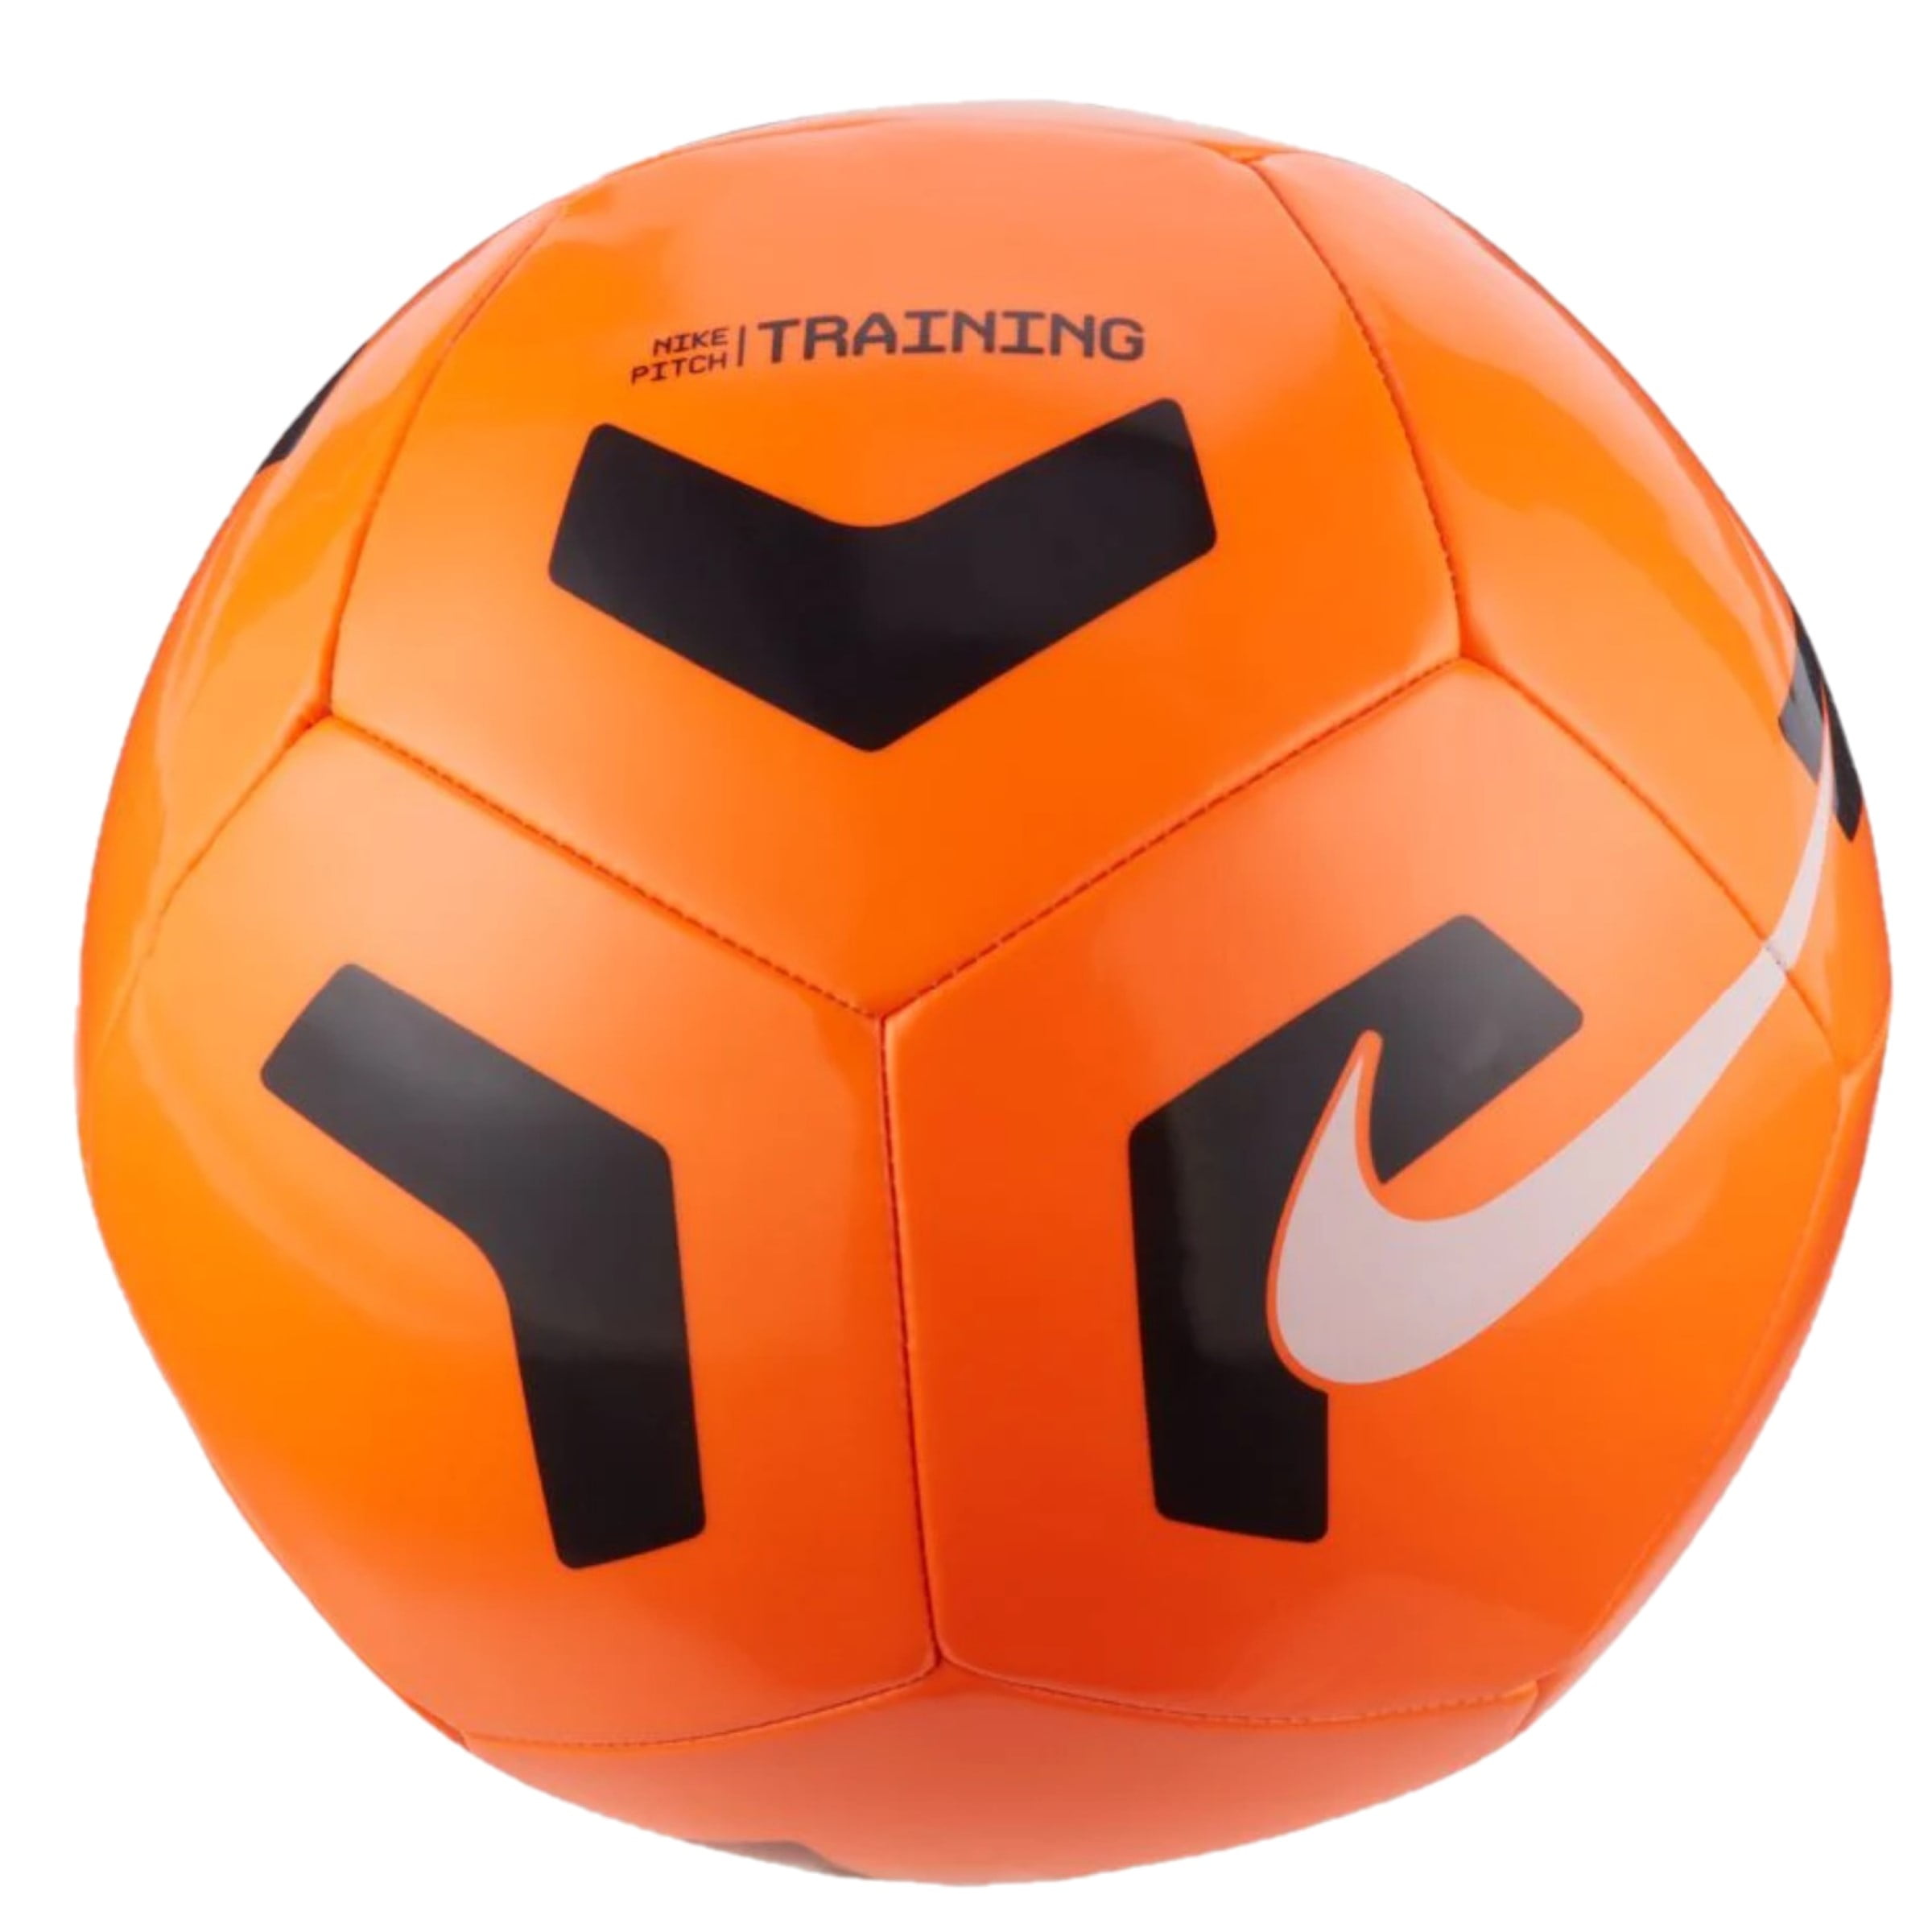 Omitir emergencia Pedicab Nike Pitch Training Soccer Ball - Orange-Black-Size 5 - Walmart.com